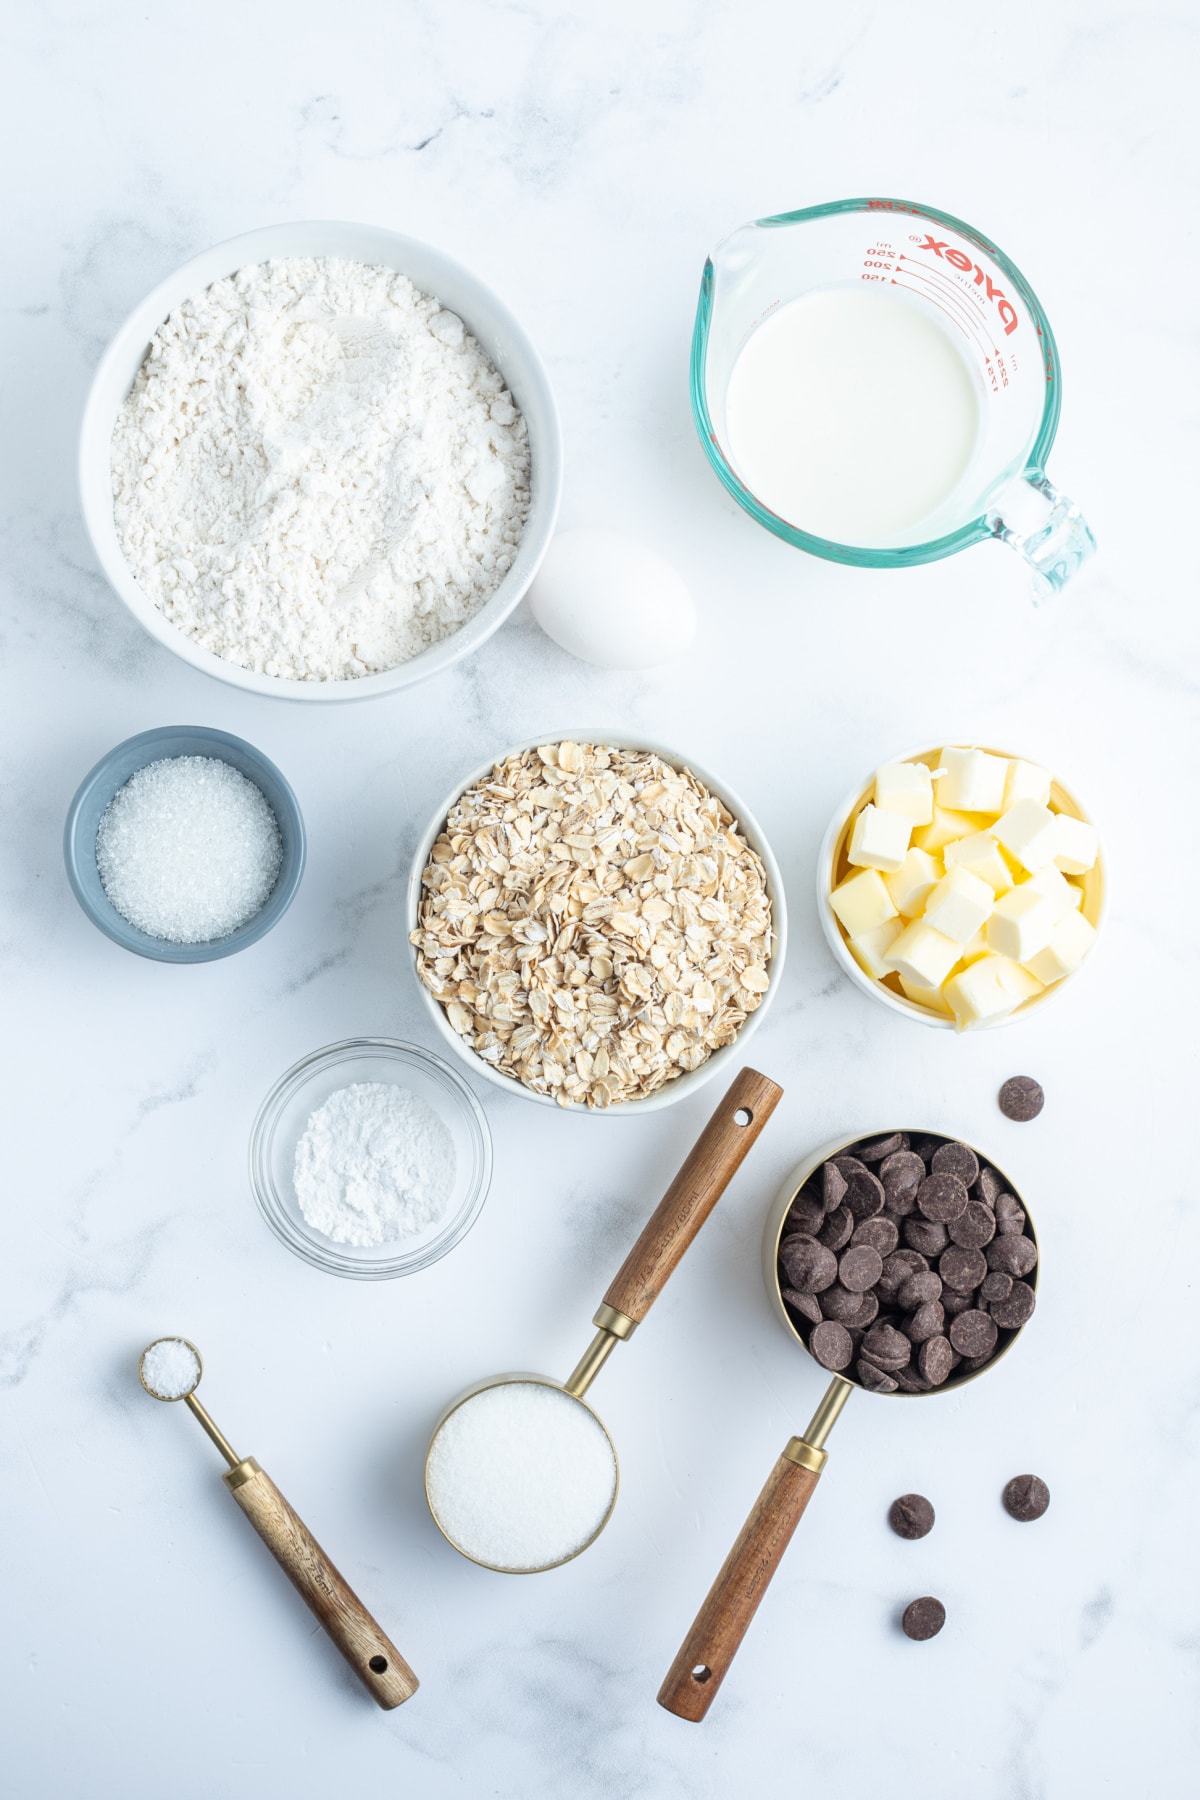 ingredients displayed for making chocolate chip scones